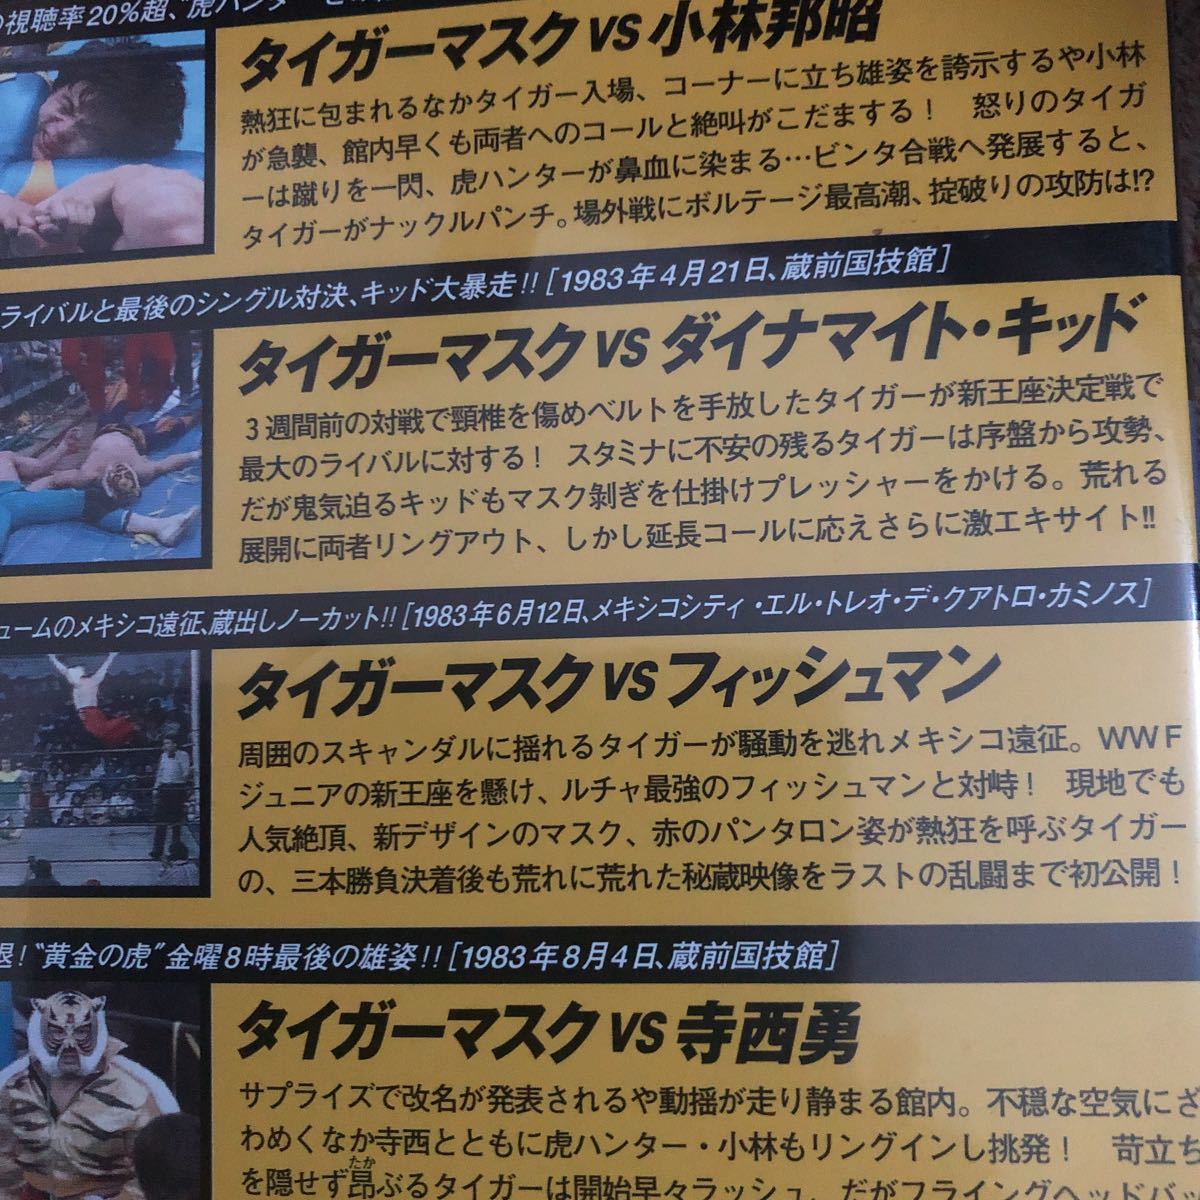  поставка со склада no- cut Tiger Mask на fishu man DVD гореть . New Japan Professional Wrestling 